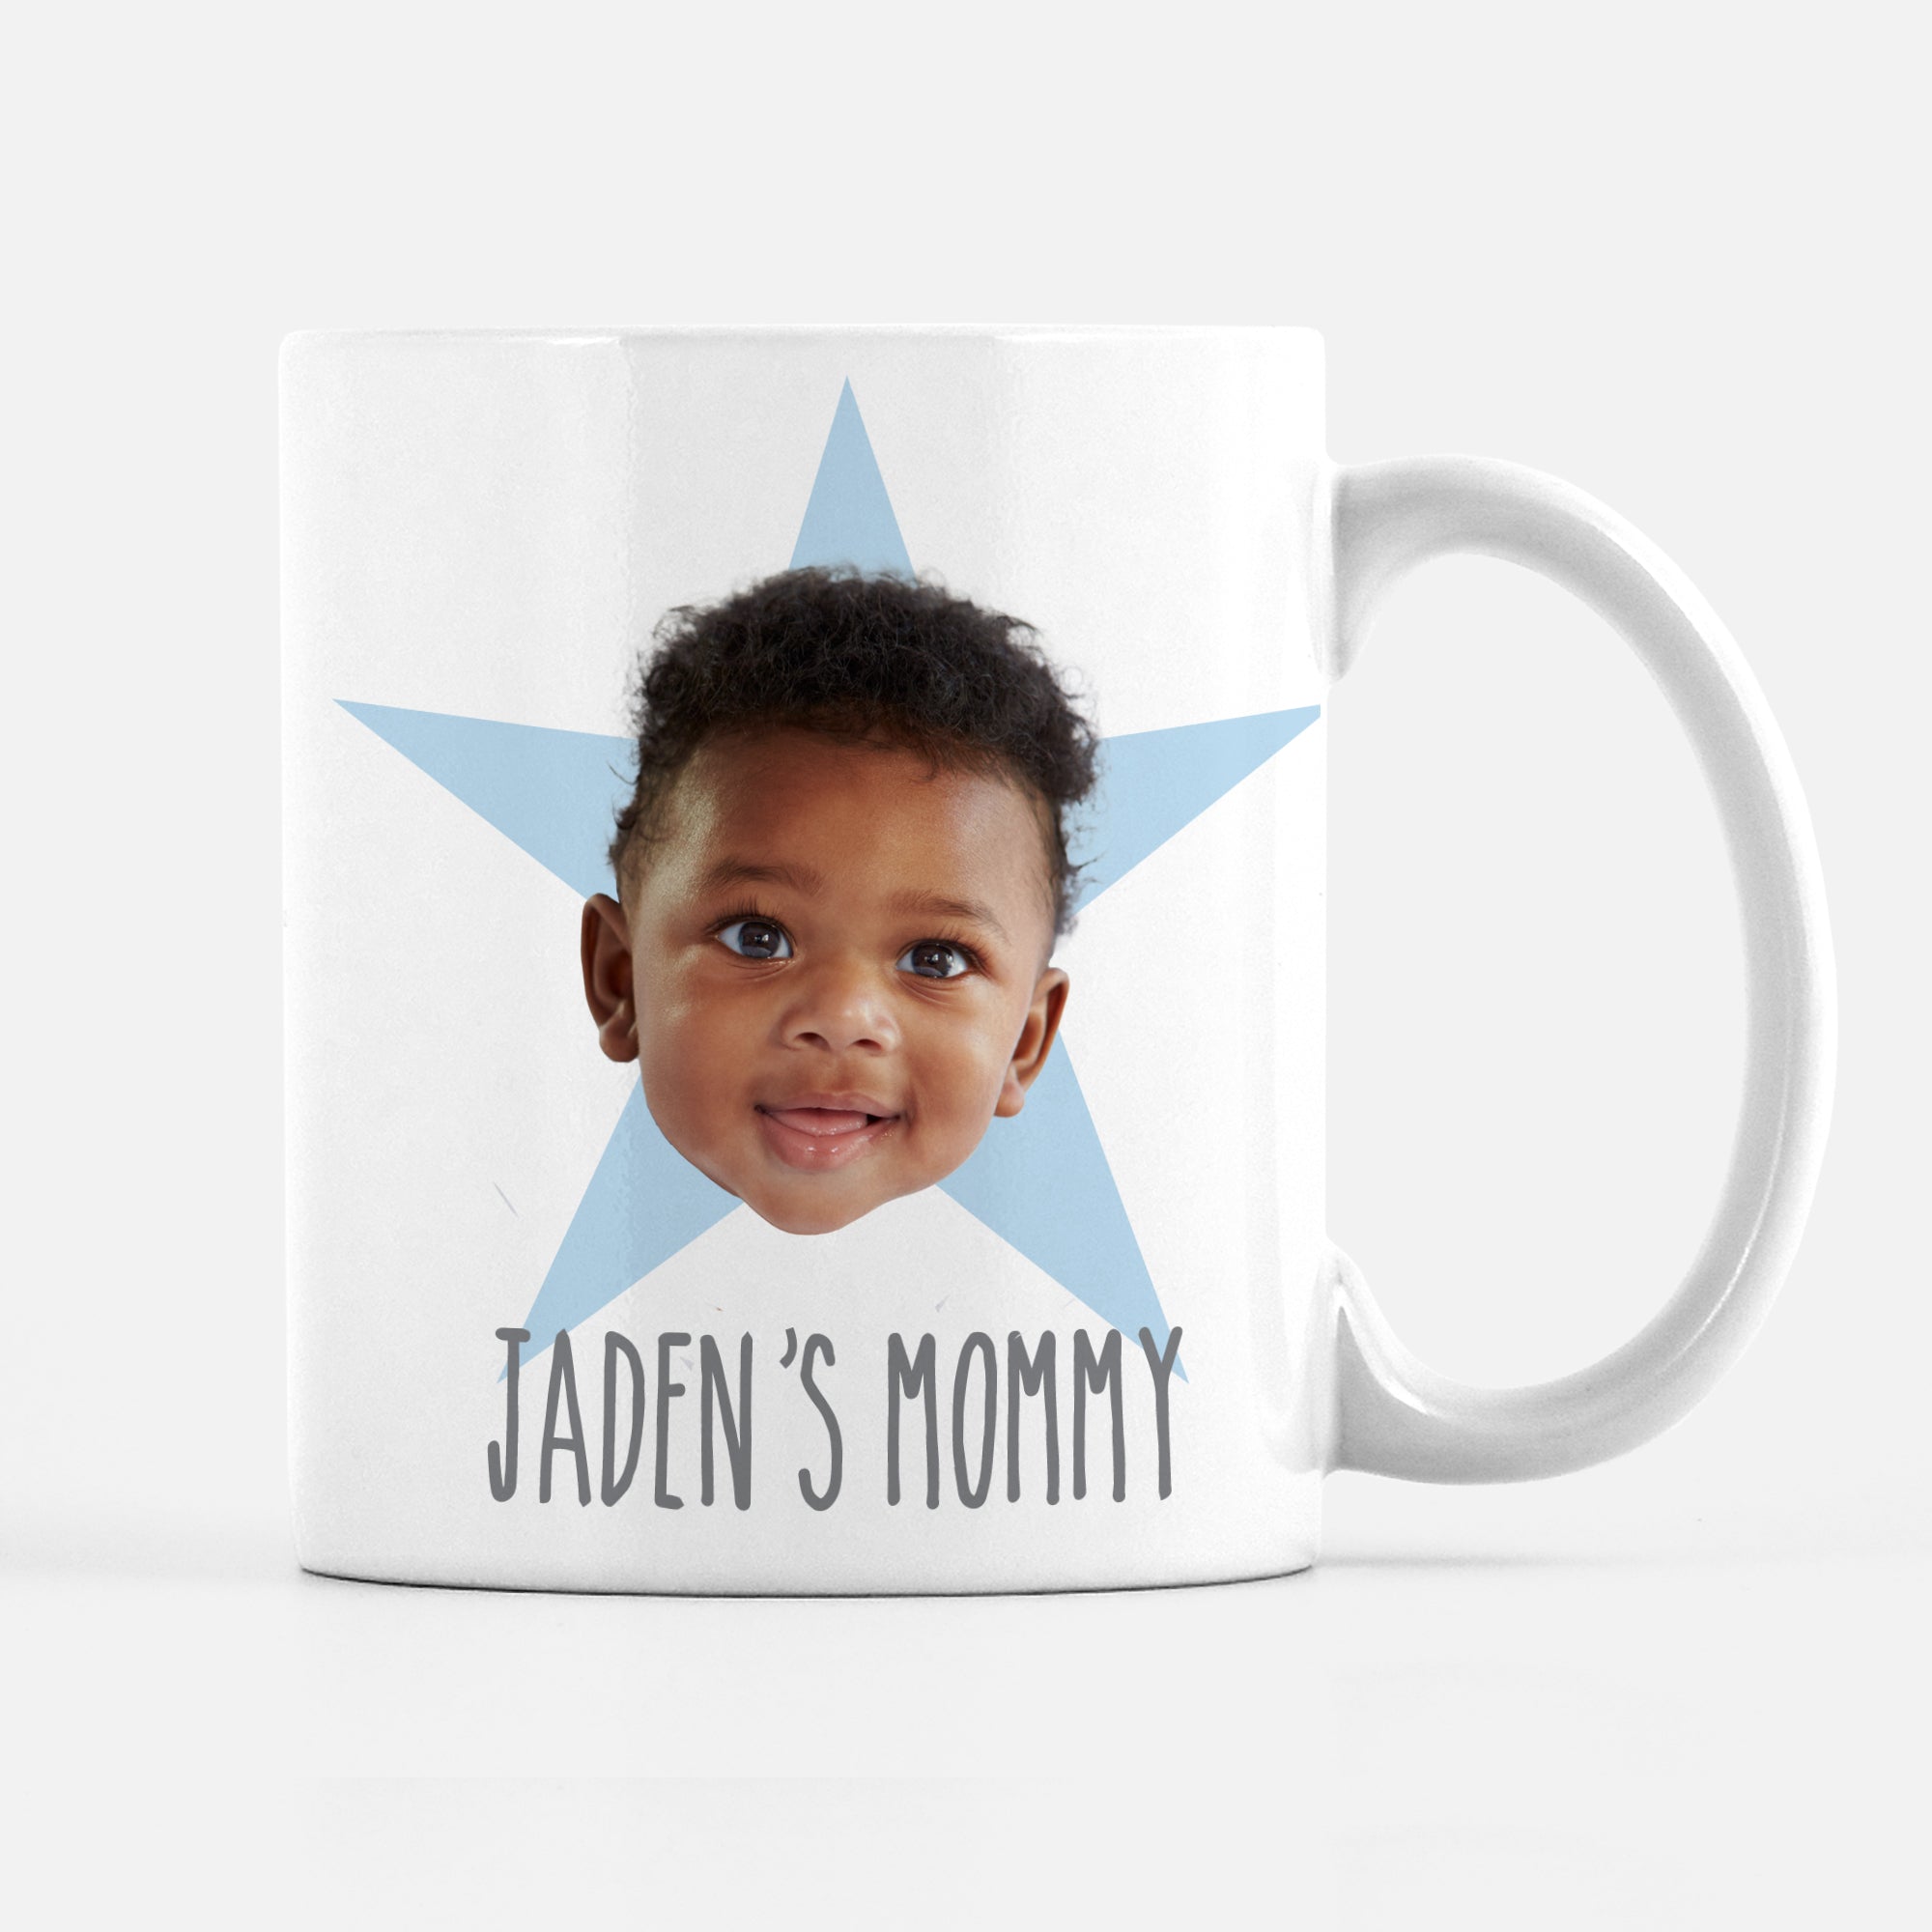 baby face custom photo mug from Pipsy.com (boy with blue star))